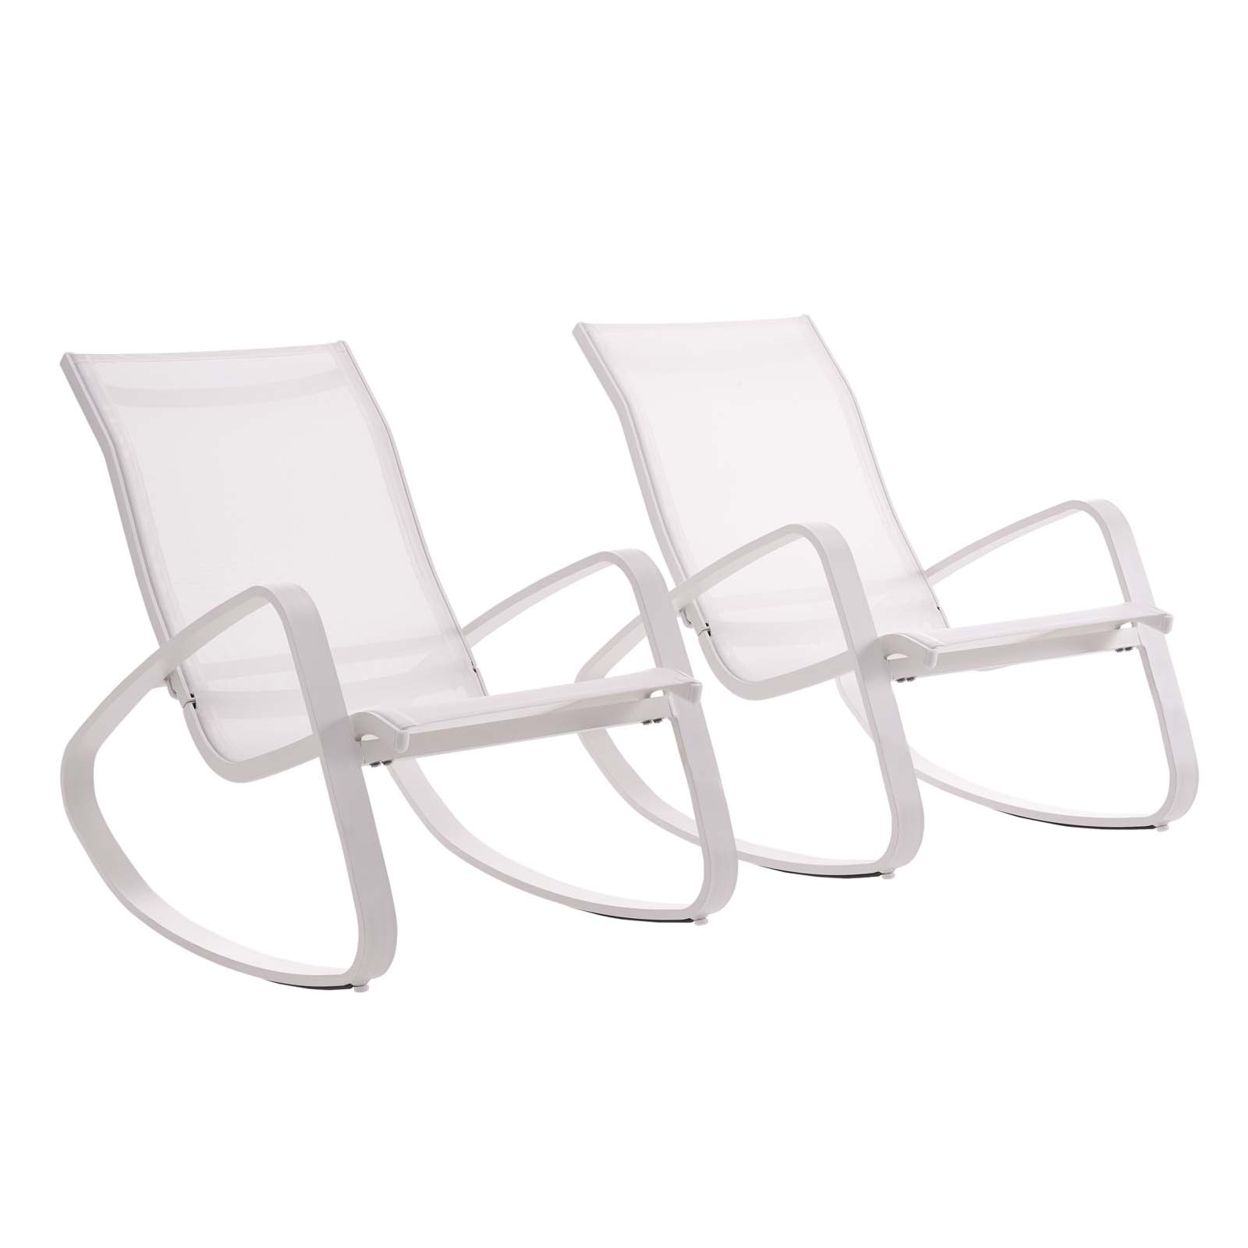 Traveler Rocking Lounge Chair Outdoor Patio Mesh Sling Set Of 2,White White